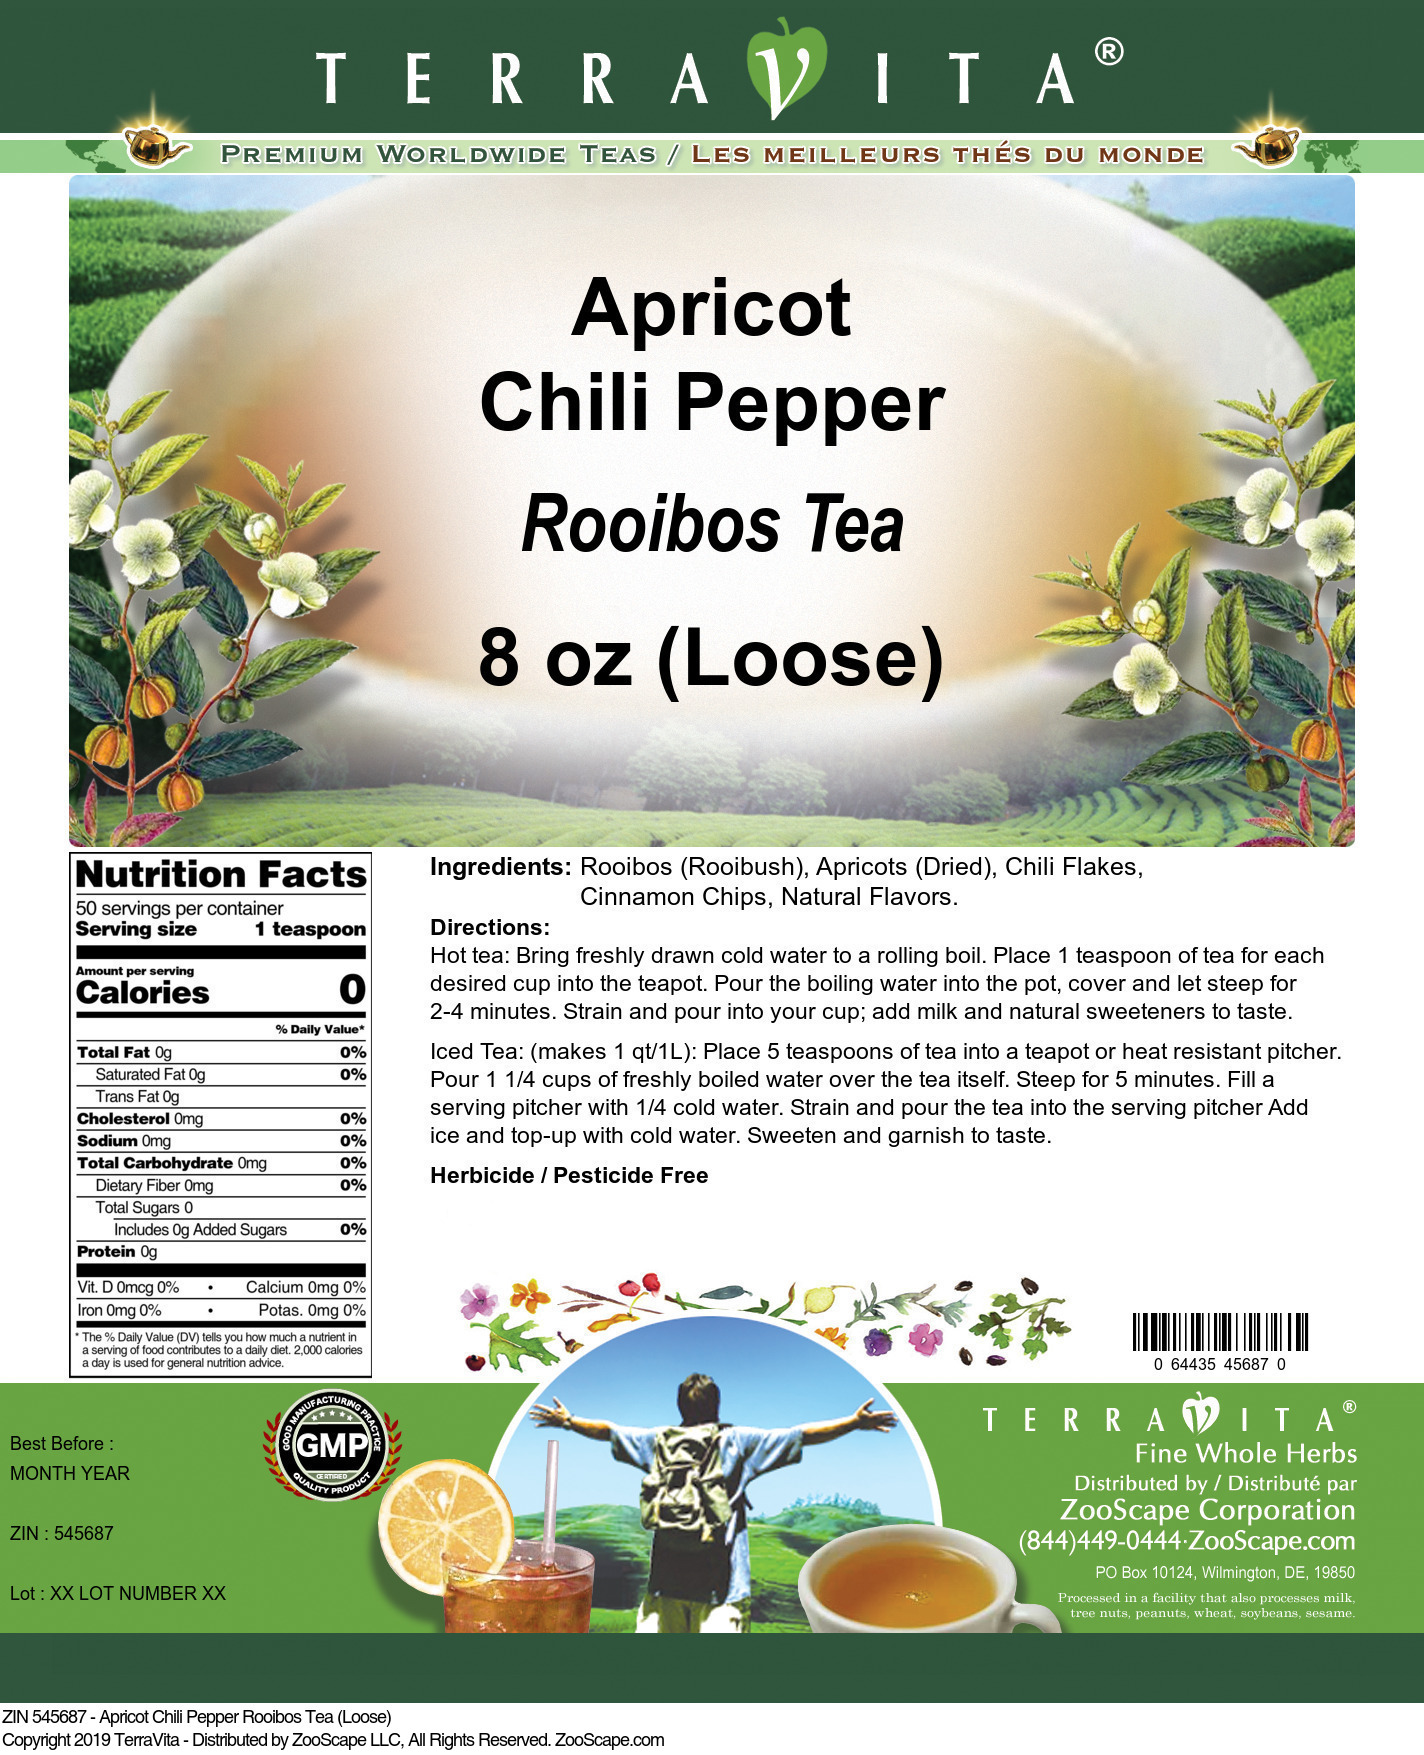 Apricot Chili Pepper Rooibos Tea (Loose) - Label